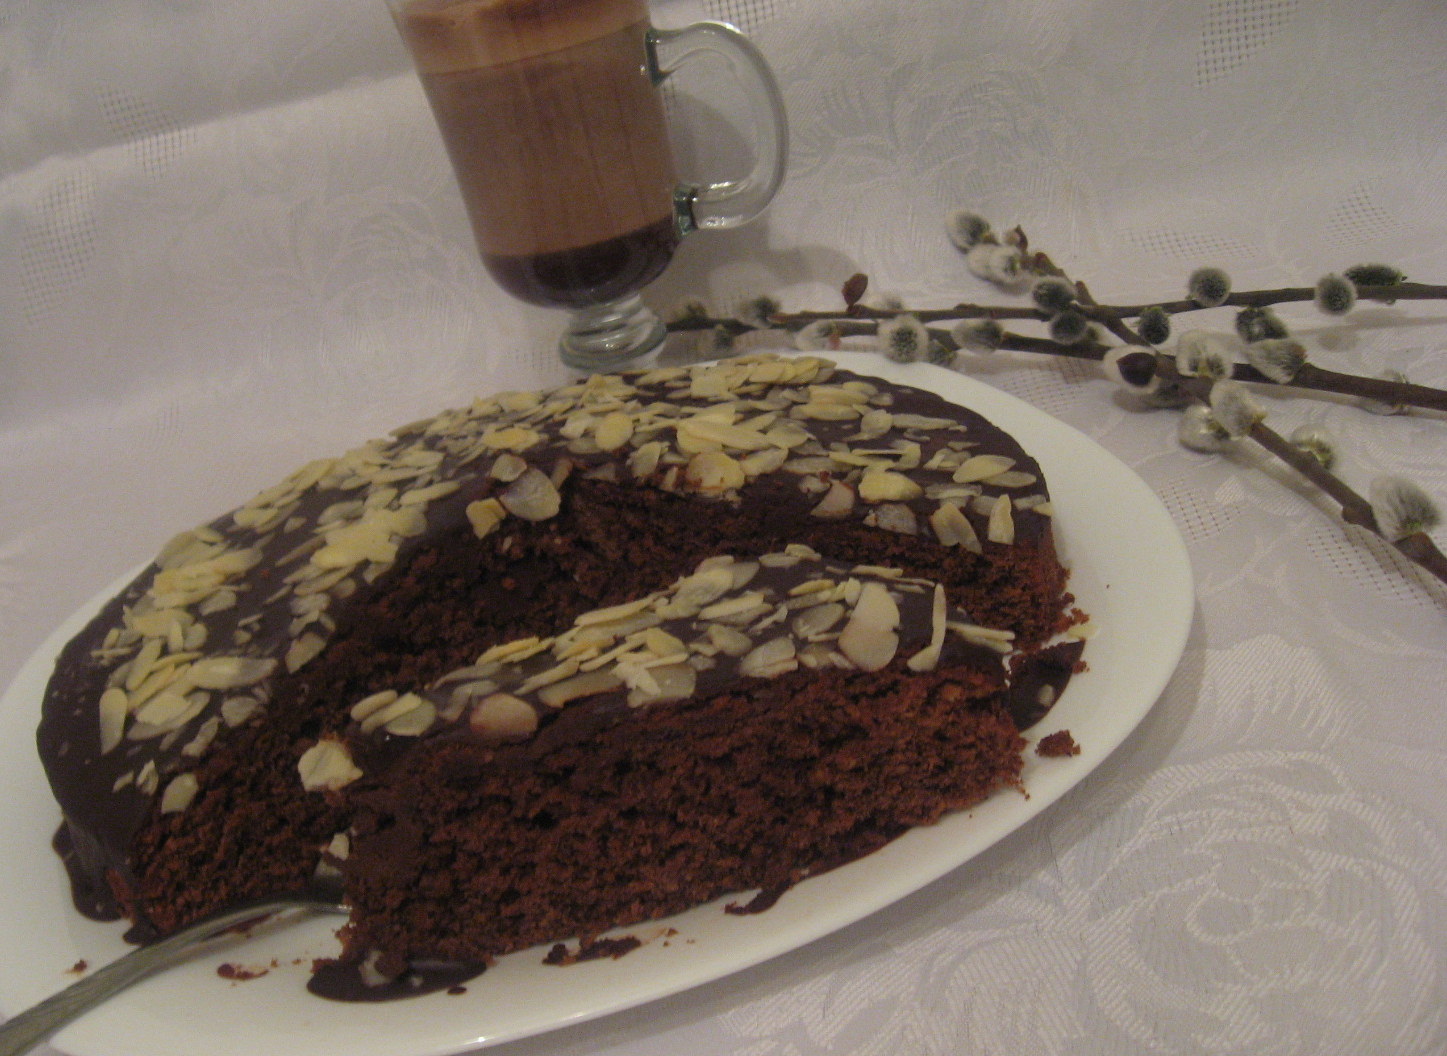 Chocolate cake by Julia Child